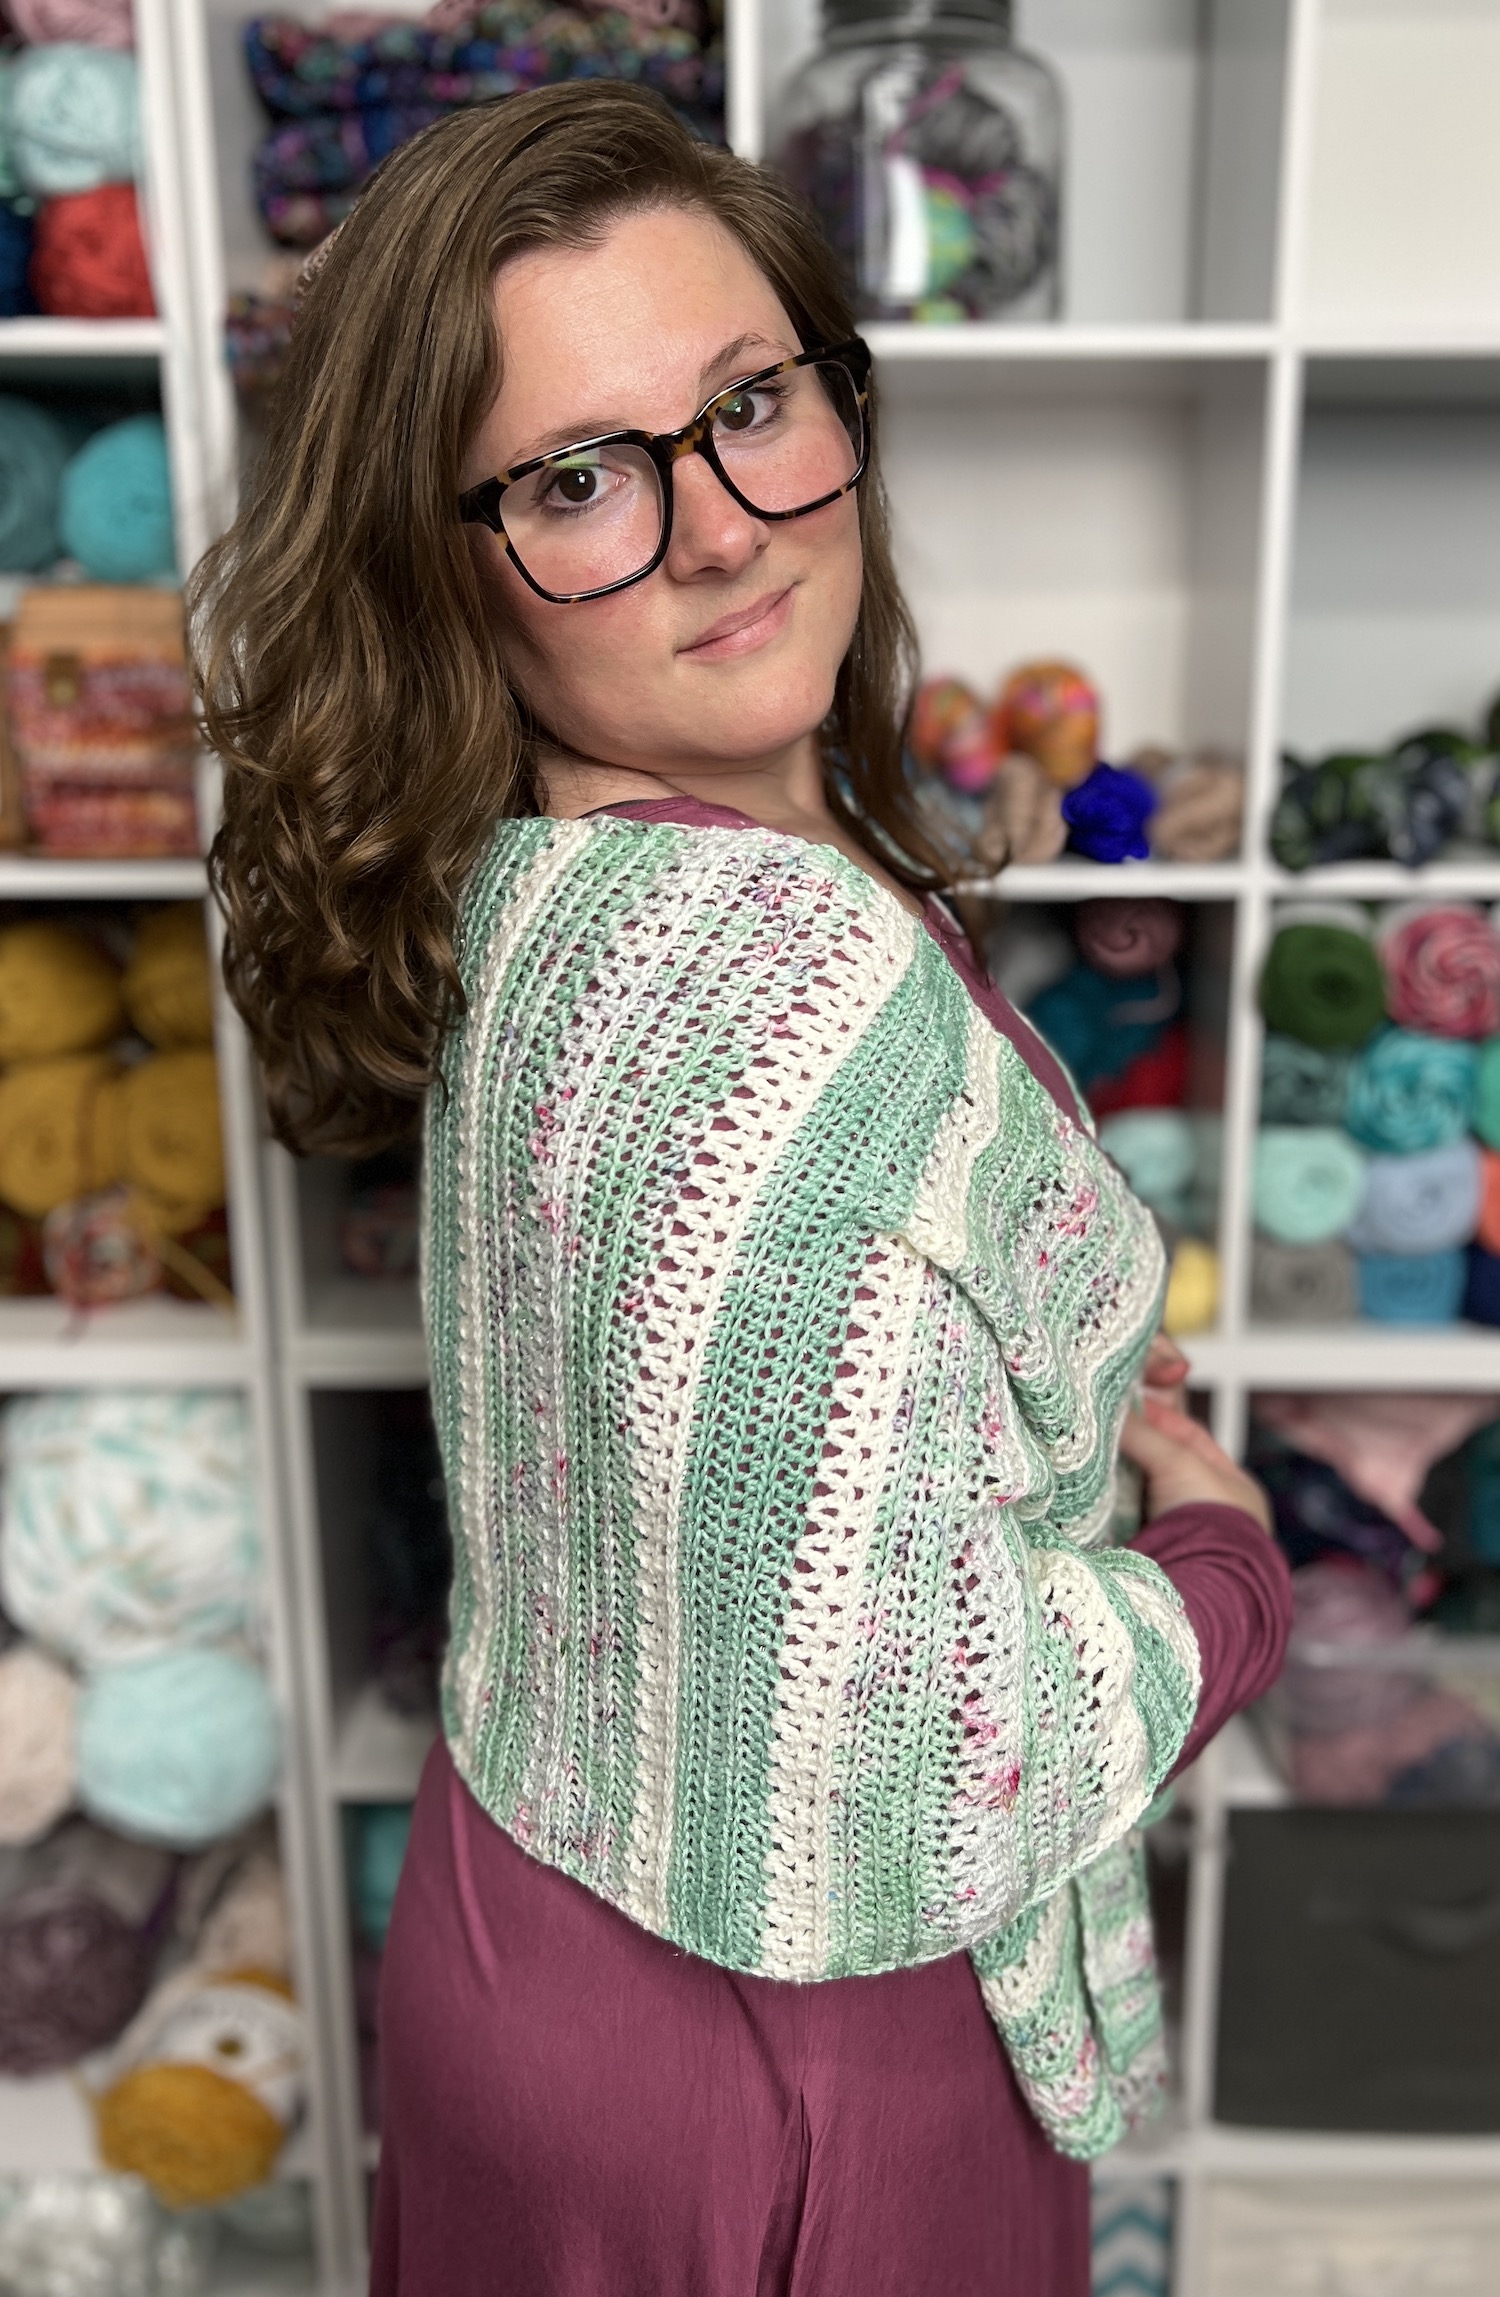 Free Crochet Pattern: Carry All Bottle Holder - Avery Lane Creations